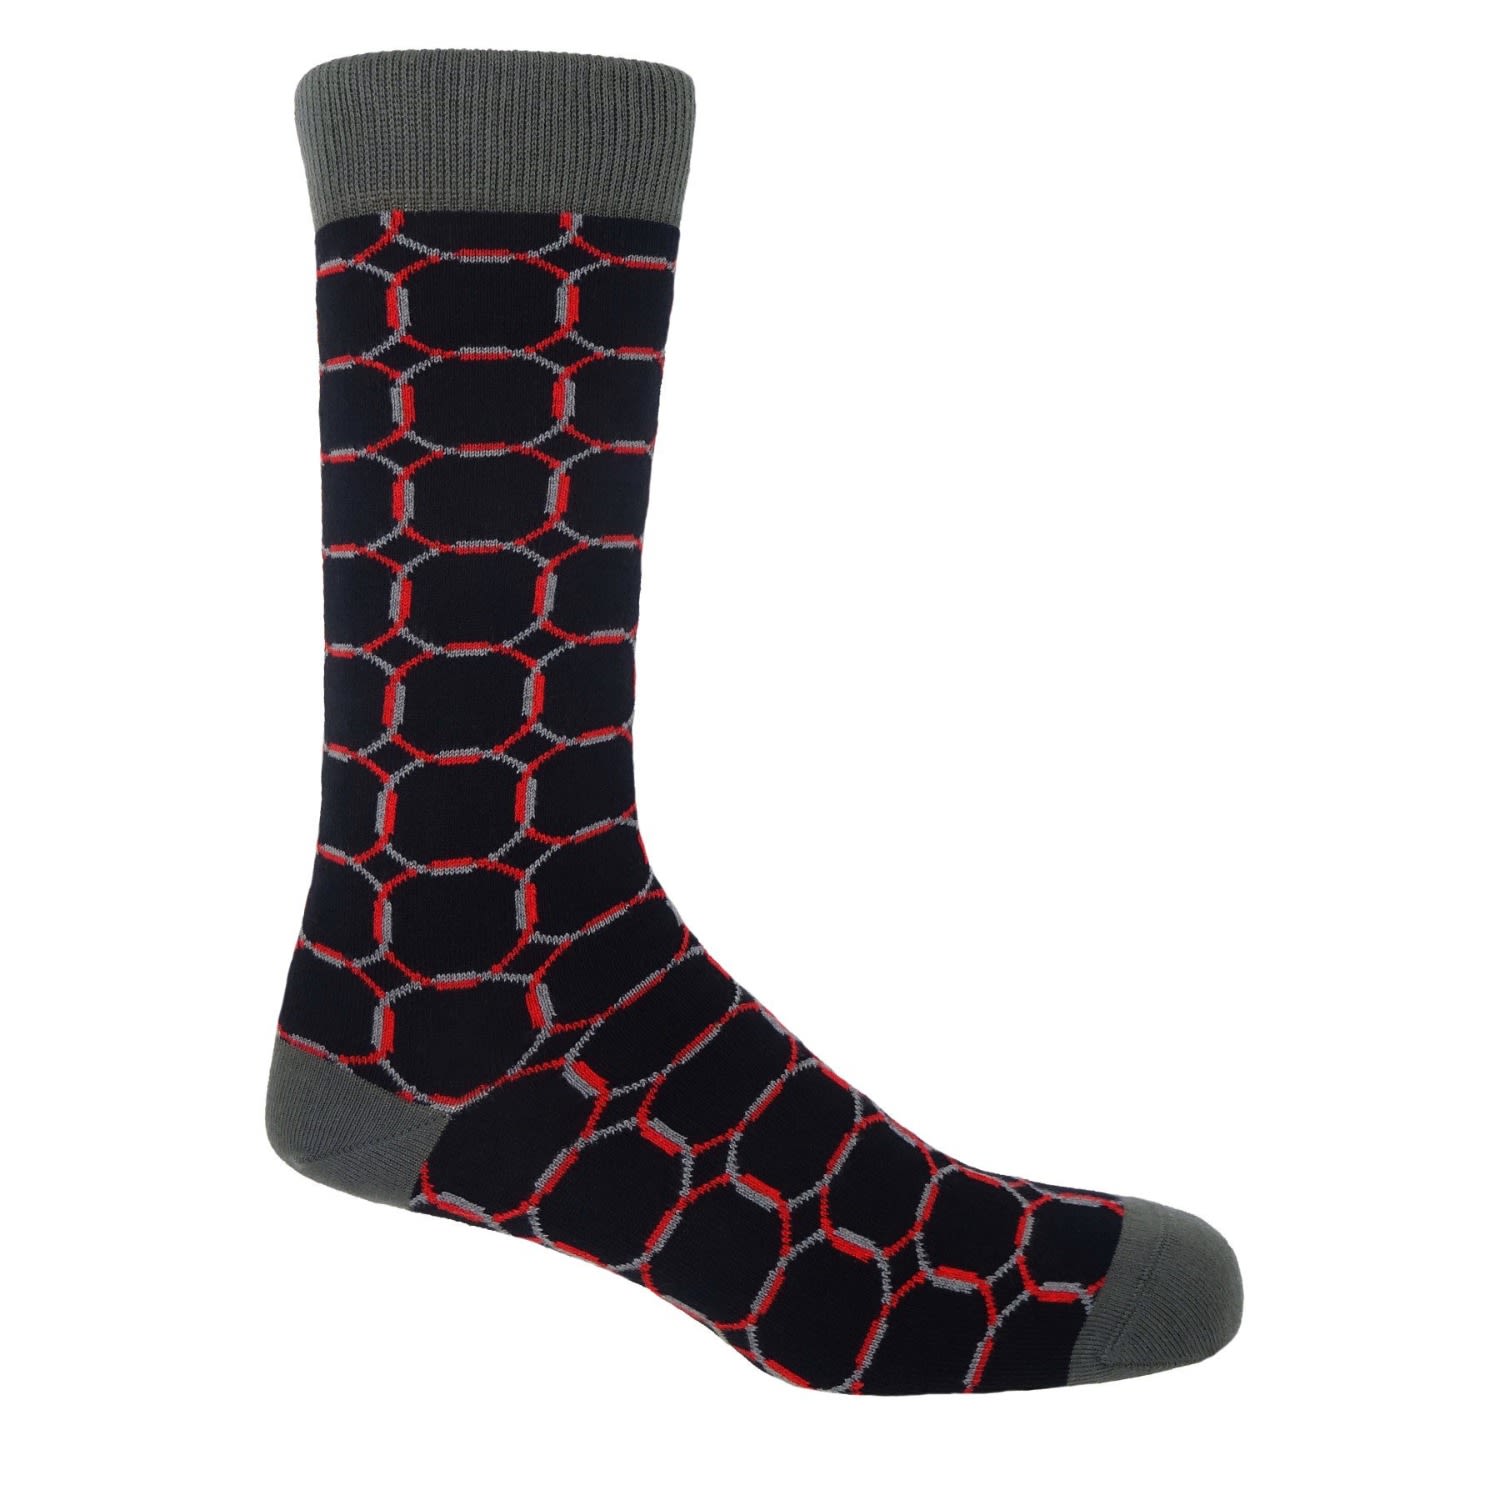 Black Linked Men’s Socks One Size Peper Harow - Made in England